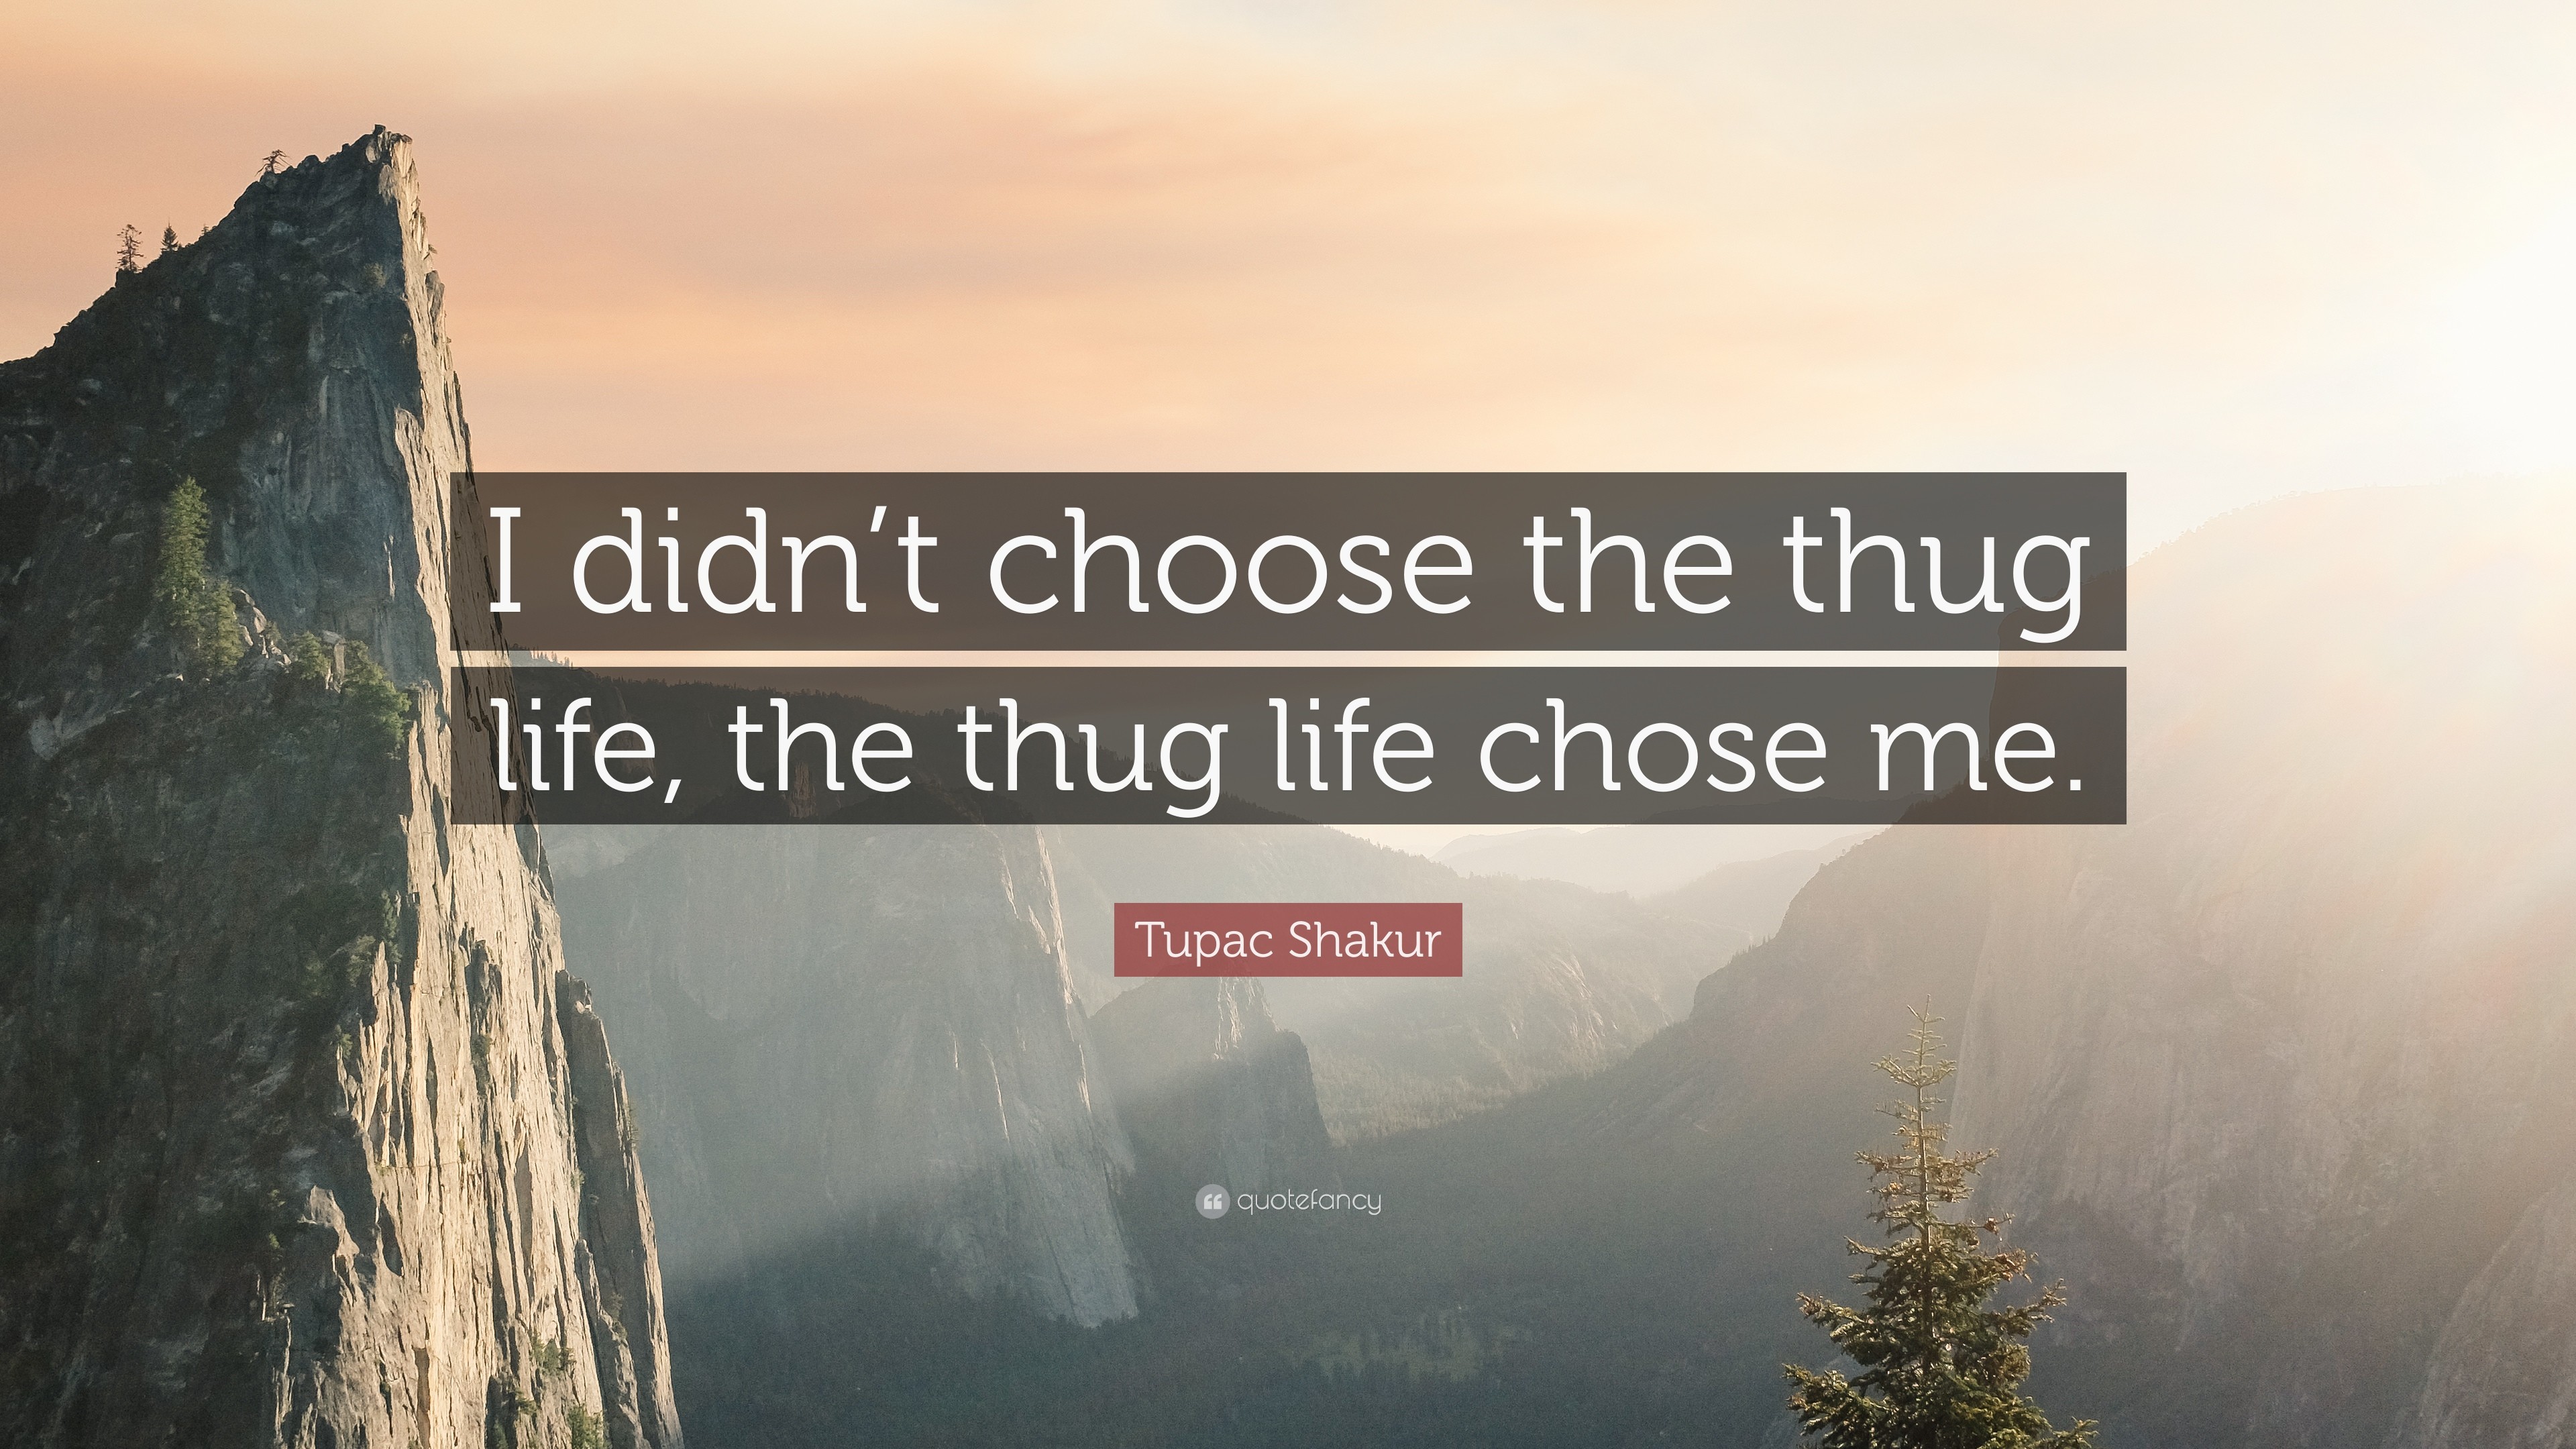 3840x2160 Tupac Shakur Quote: “I didn't choose the thug life, the thug